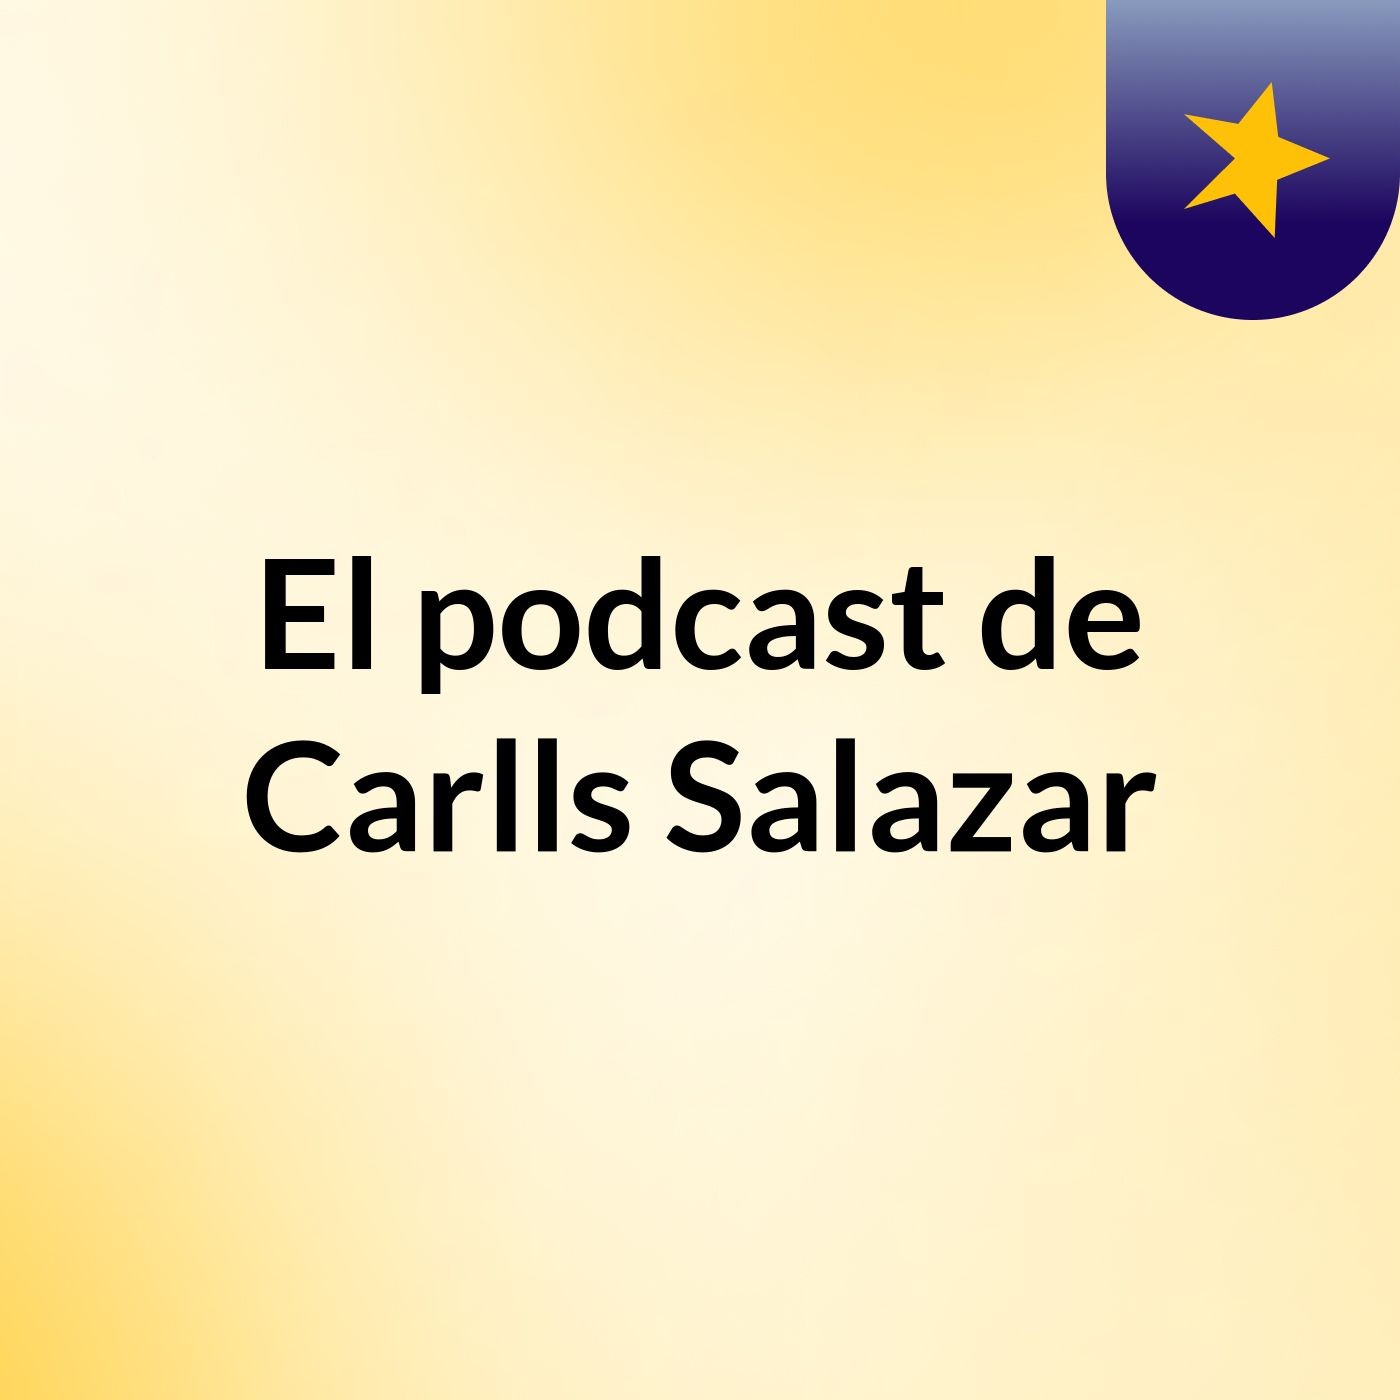 Episodio 3 - El podcast de Carlls Salazar